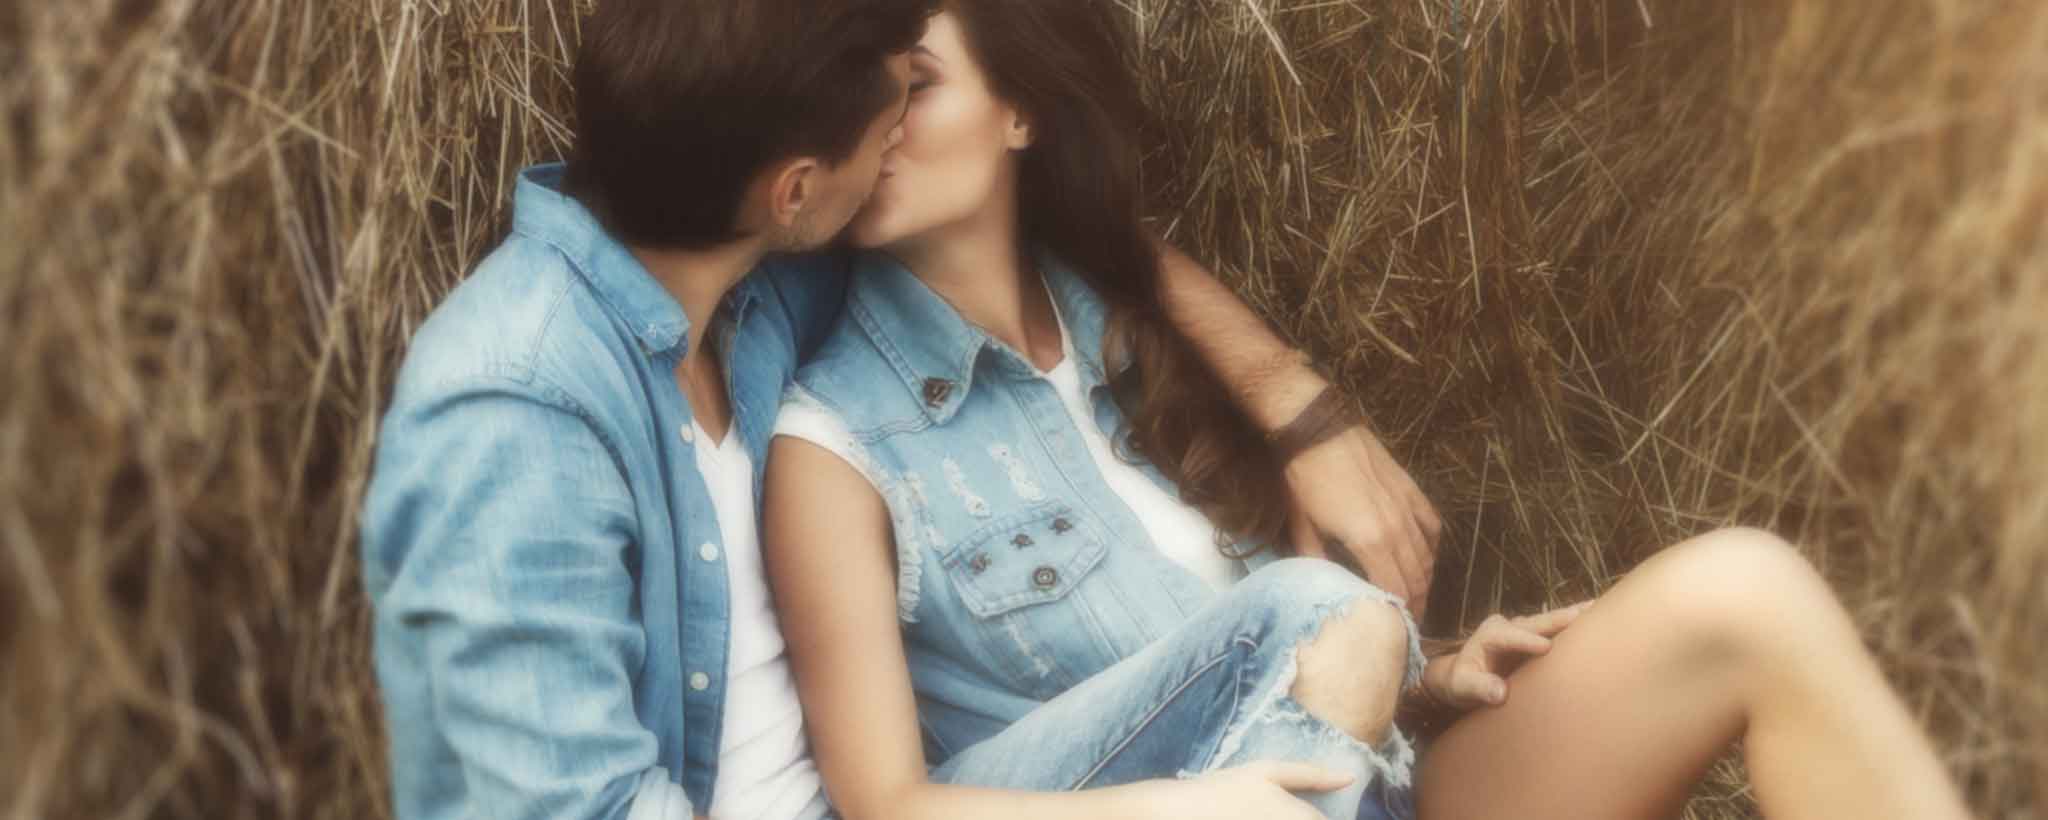 'Couple haystack kiss'